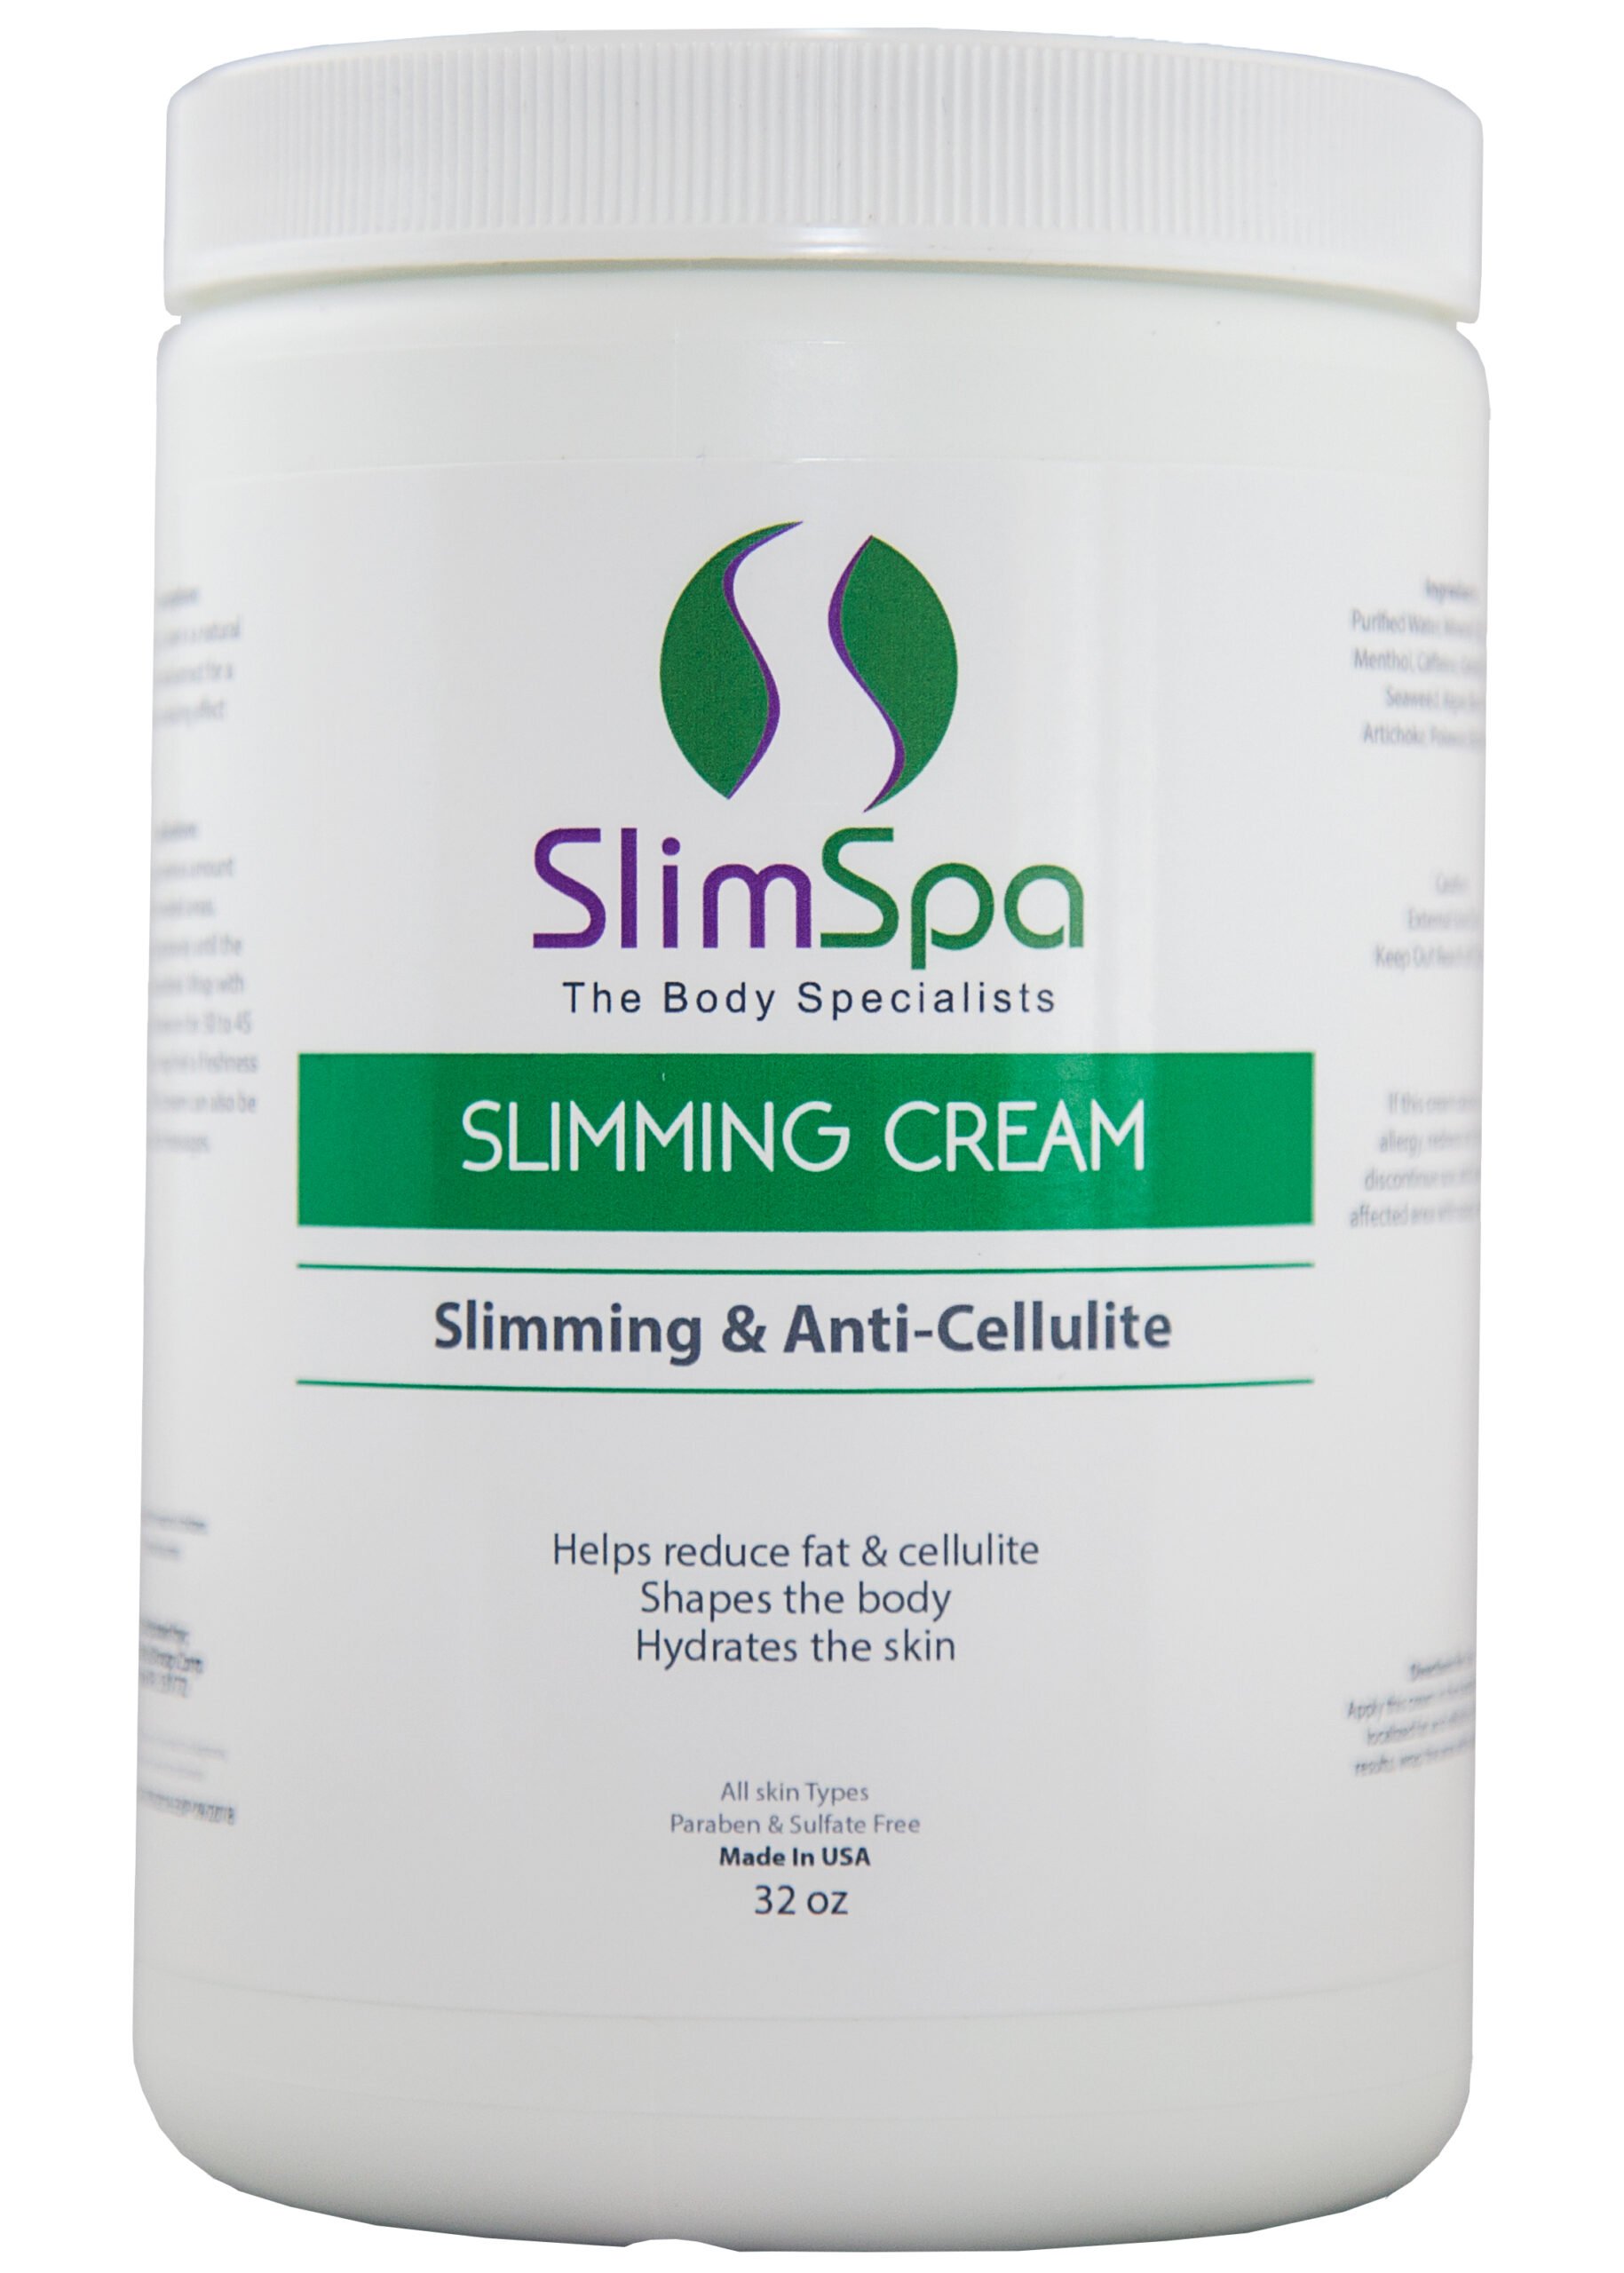 https://slimspaonline.com/wp-content/uploads/2016/06/slimming-cream-32oz-scaled.jpg